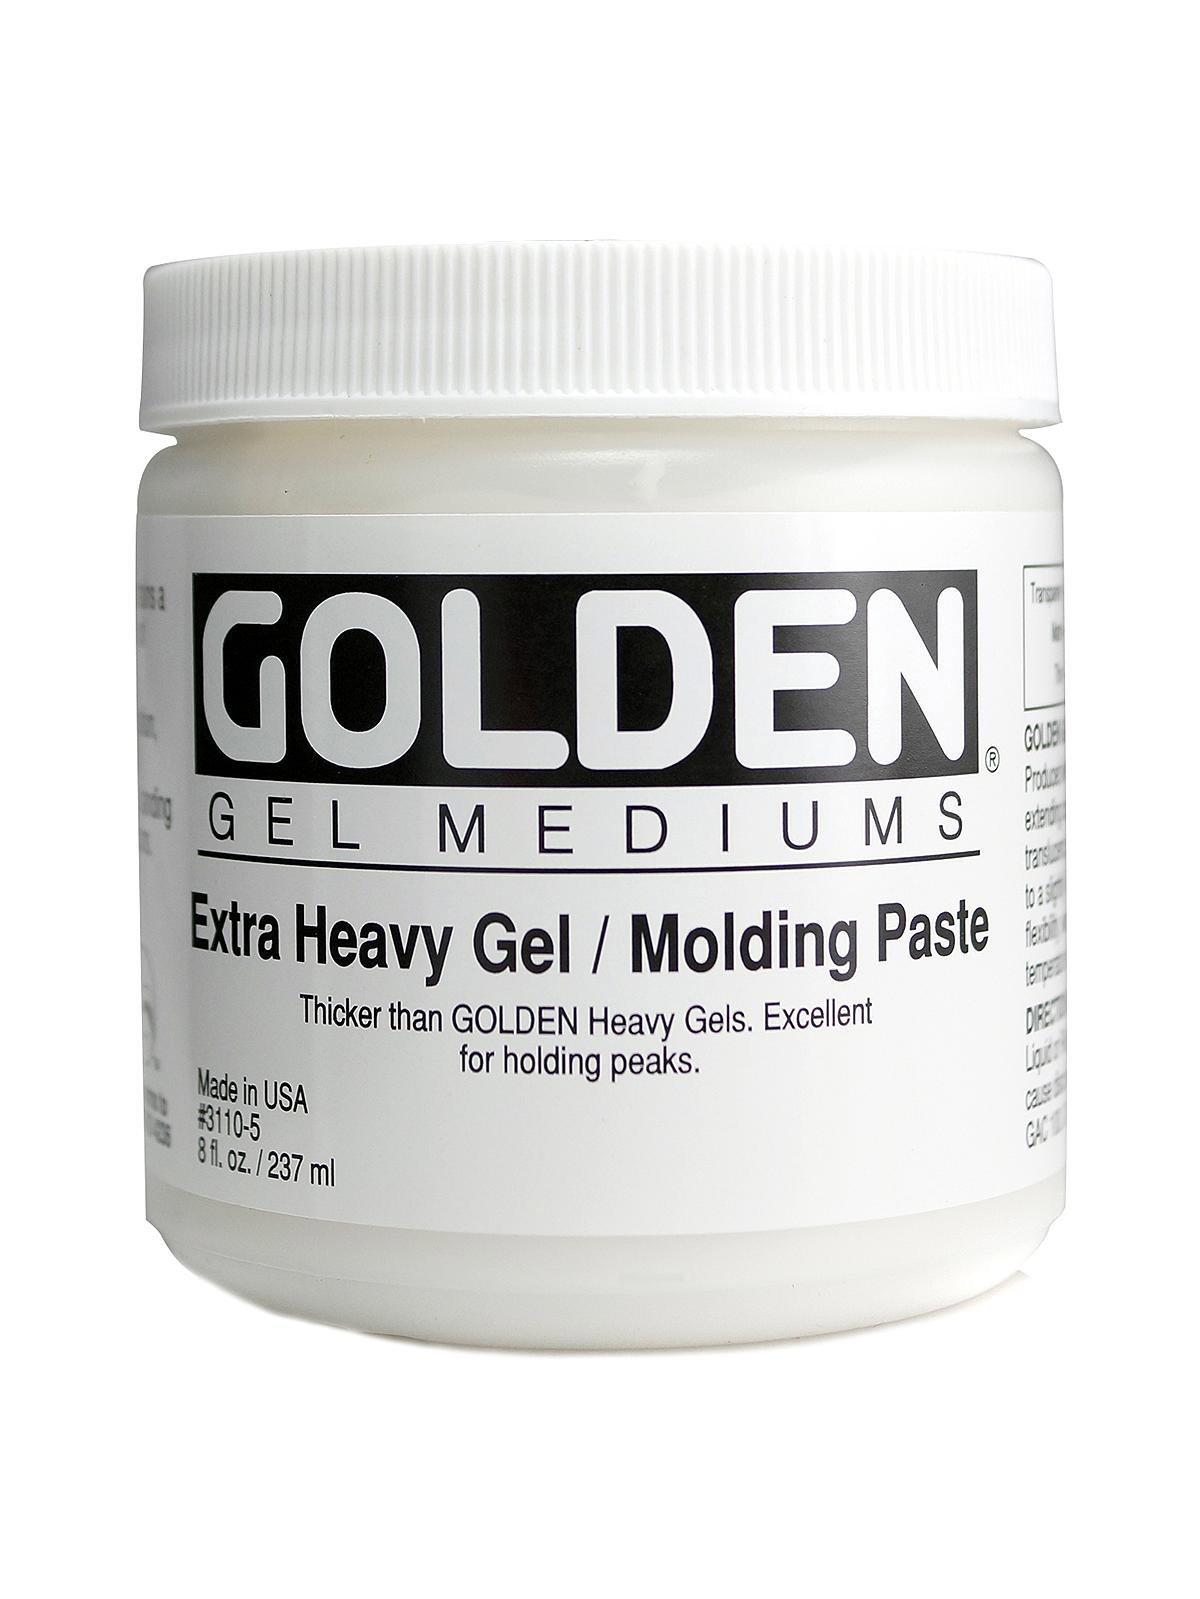 Golden Hard Molding Paste 16 oz